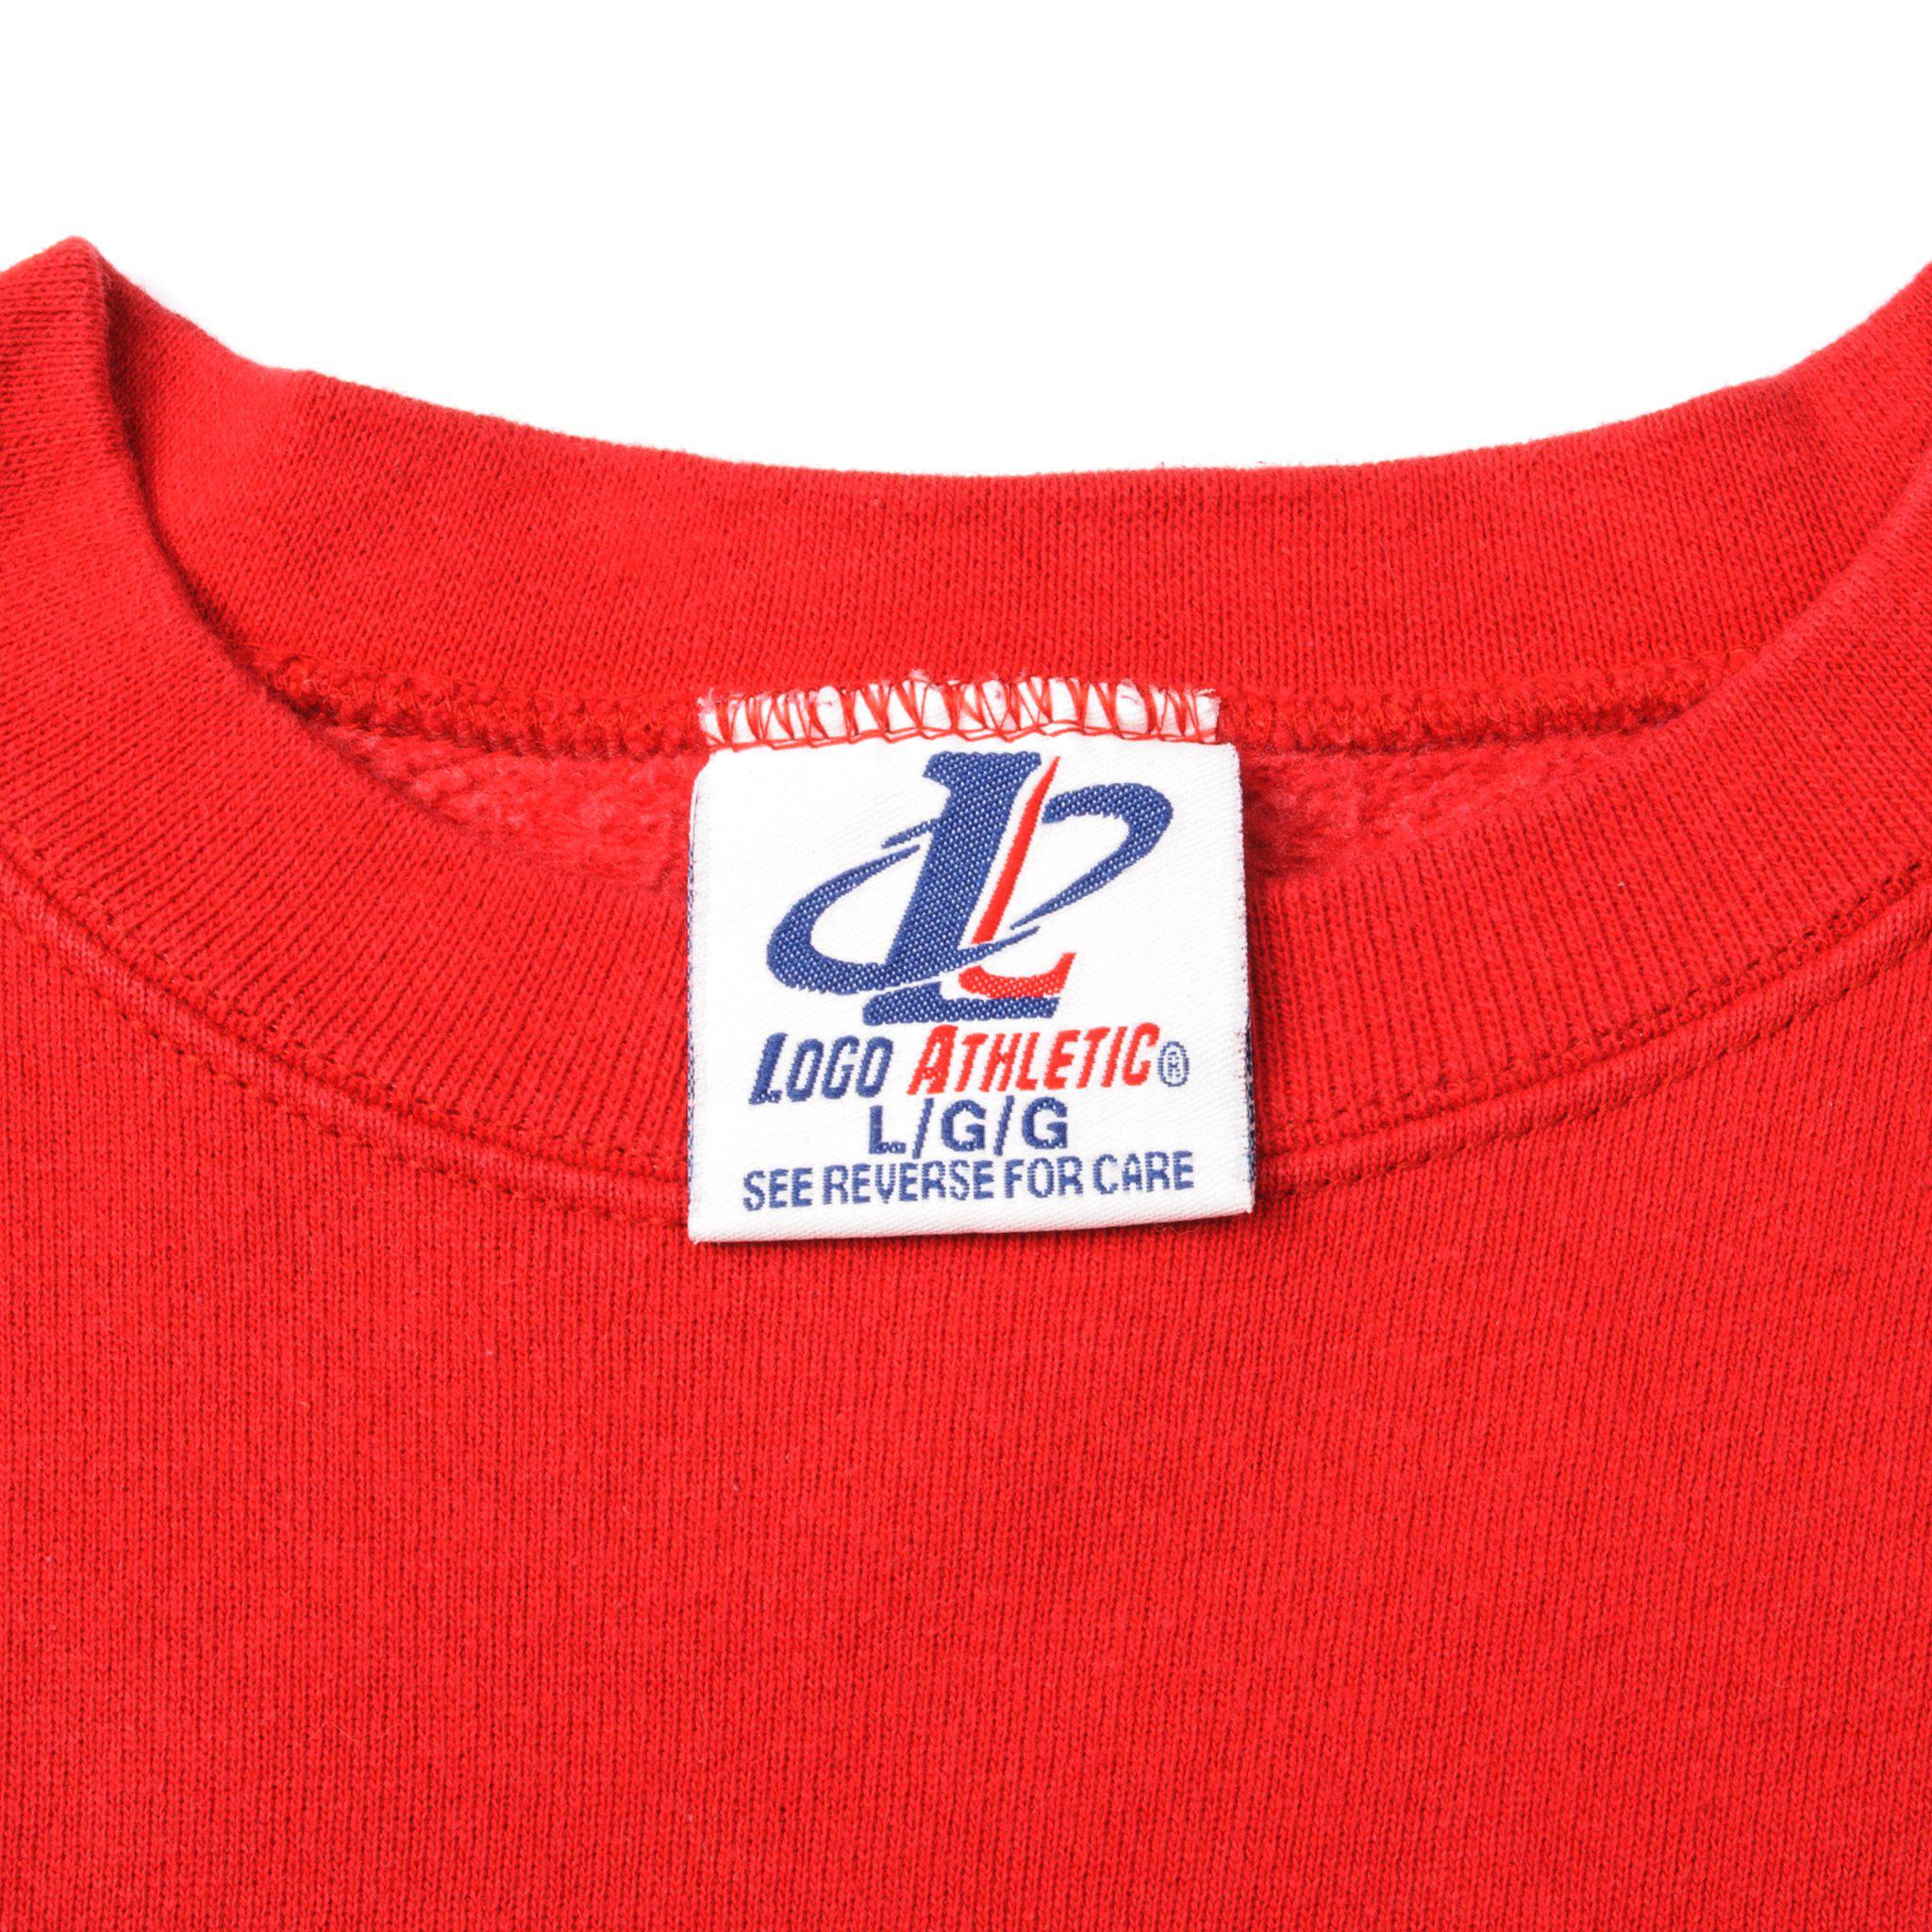 Chicago Bulls NBA Sweatshirt- Large – The Vintage Store